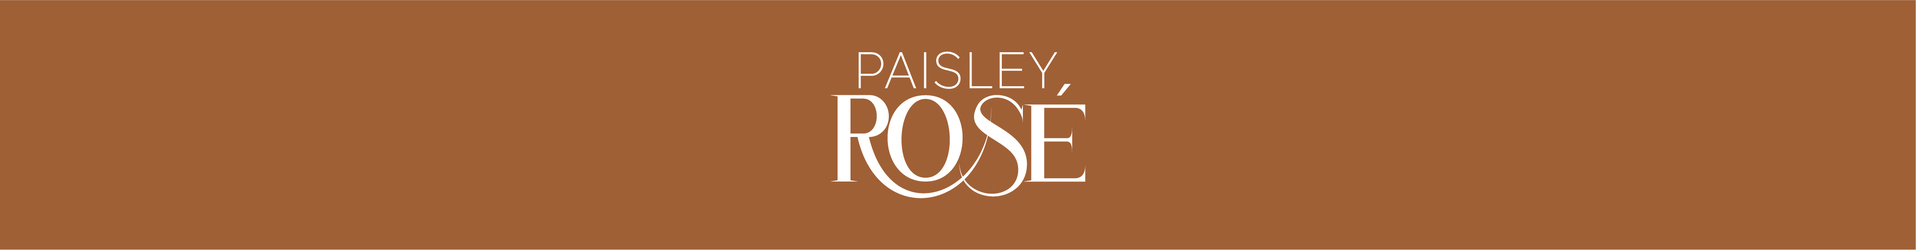 Paisley Rose